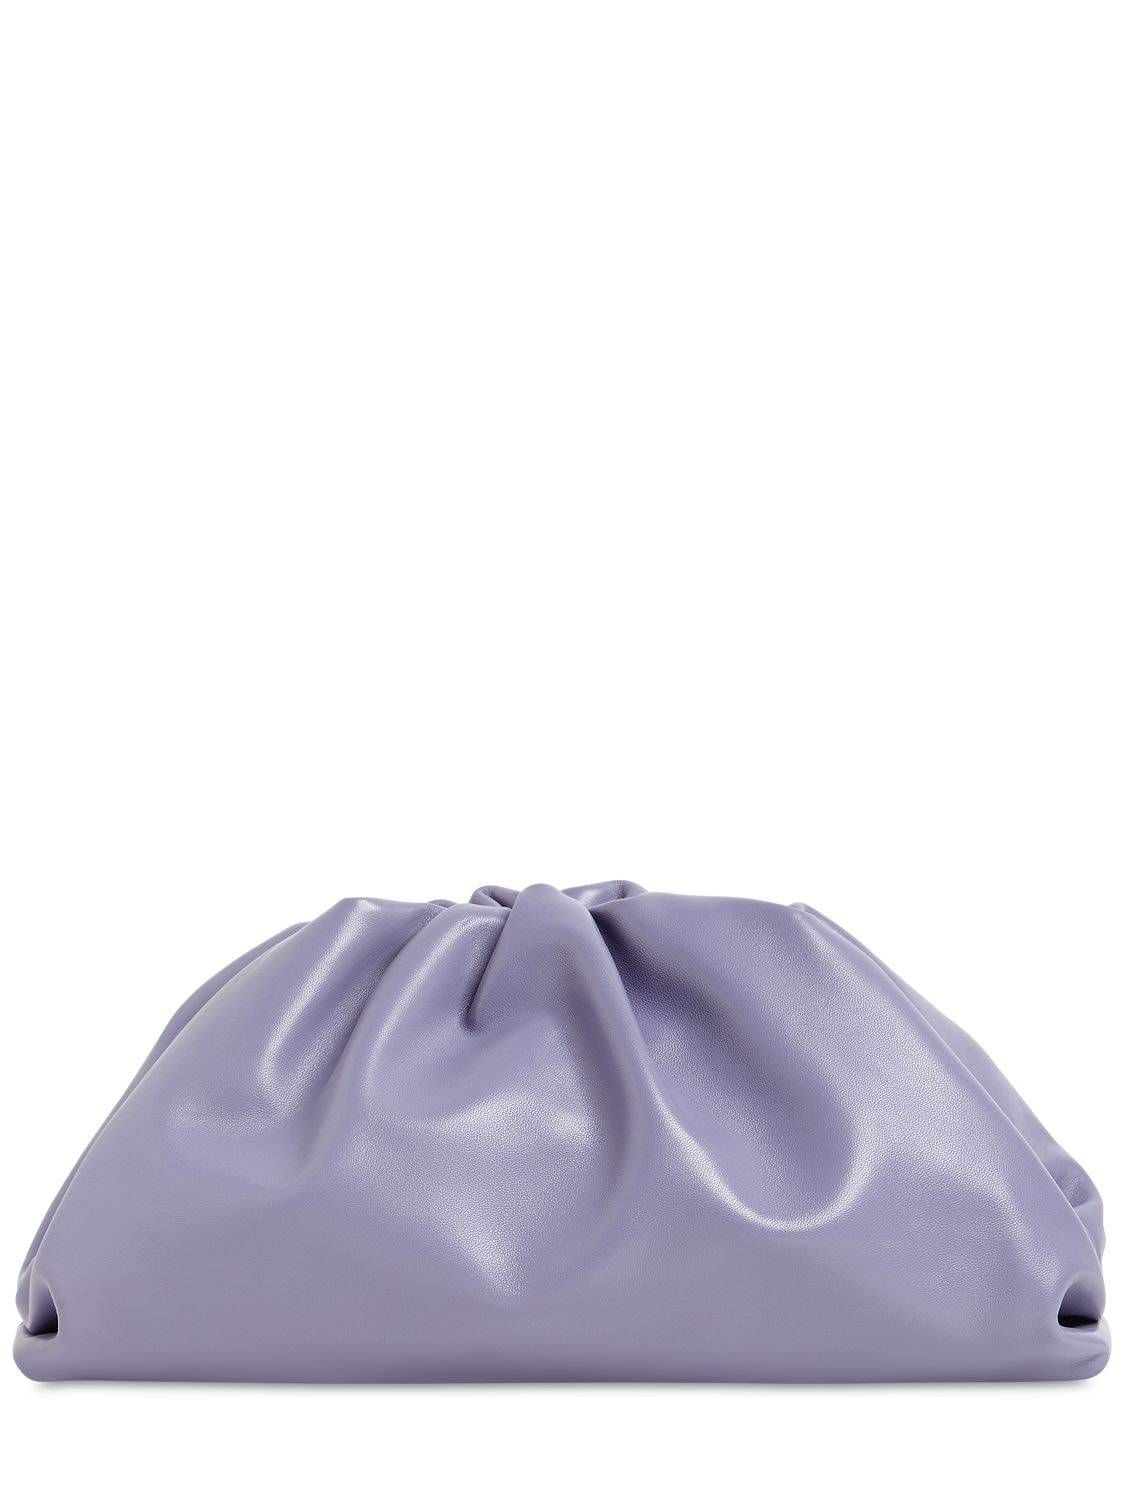 Bottega Veneta The Pouch Bag In Butter Calf Leather In Lavender